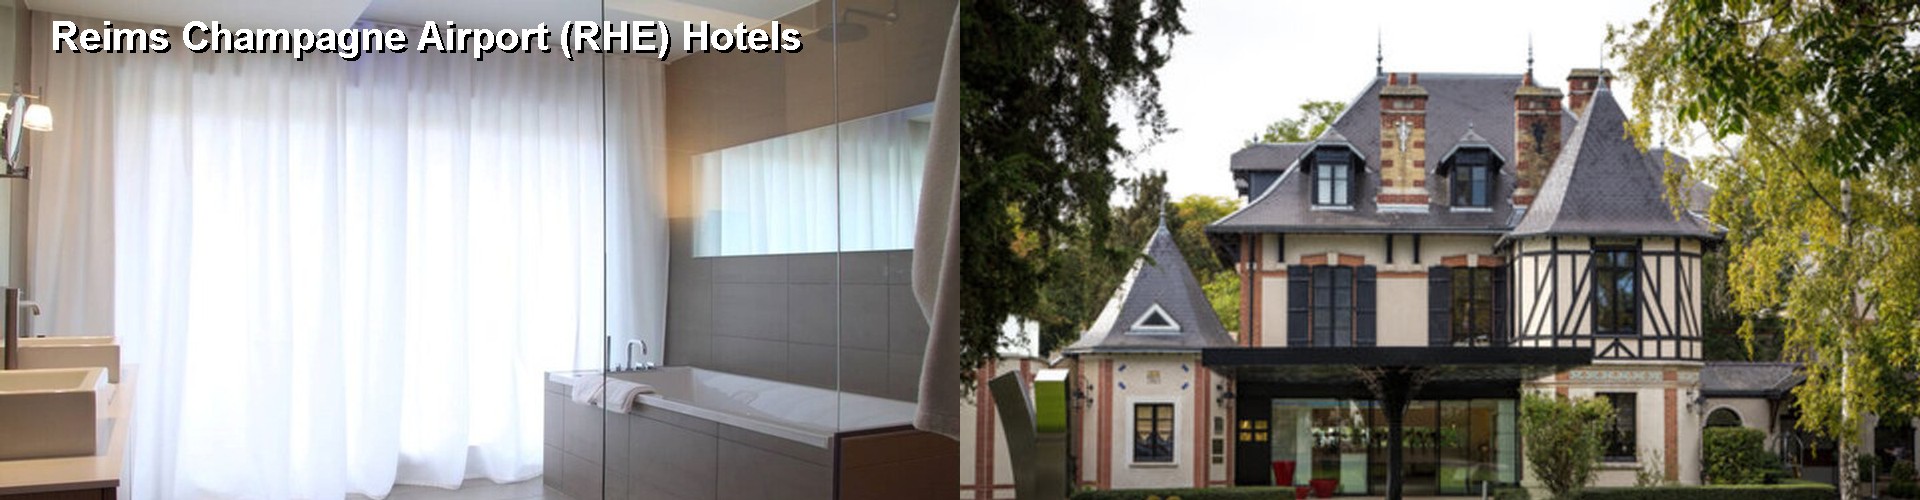 4 Best Hotels near Reims Champagne Airport (RHE)